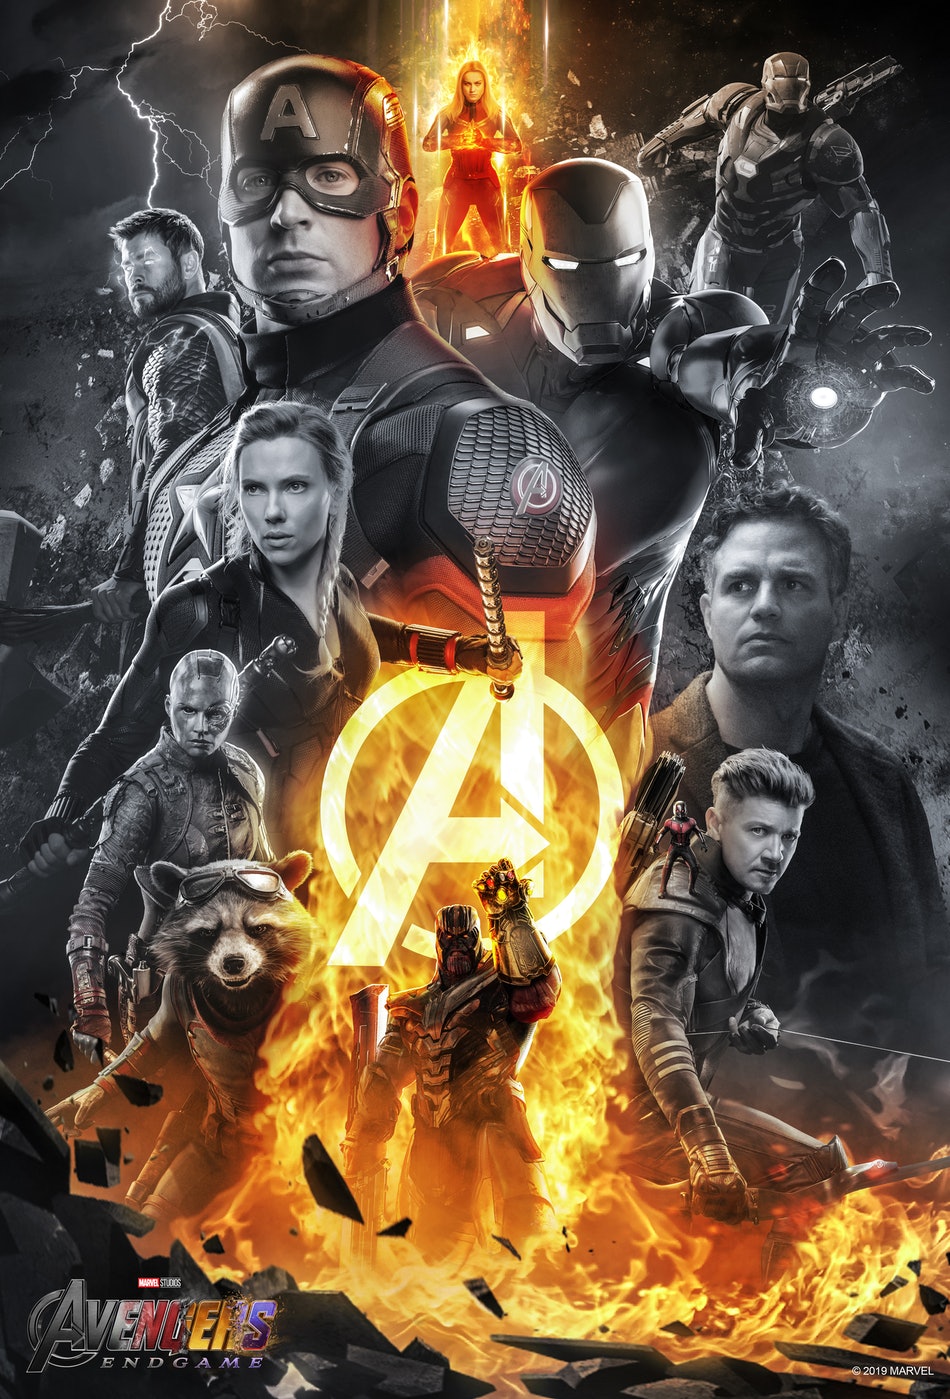 Avengers infinity war 2